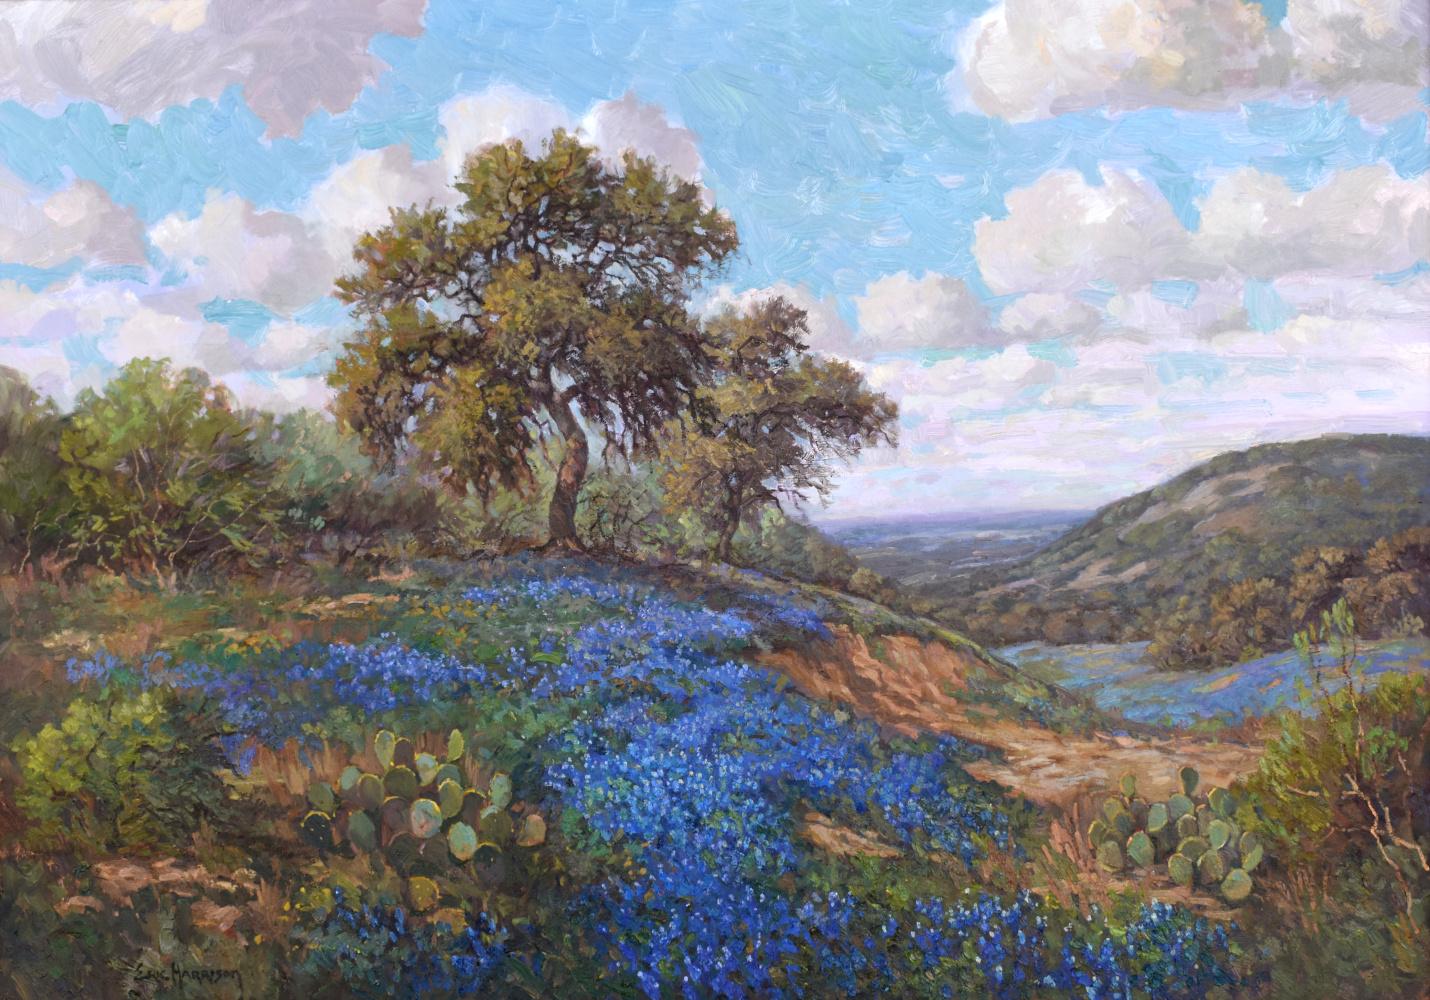 Eric Harrison Landscape Painting - "CERULEAN SPRING" BLUEBONNETS ERIC HARRISON, TEXAS HILL COUNTRY LANDSCAPE